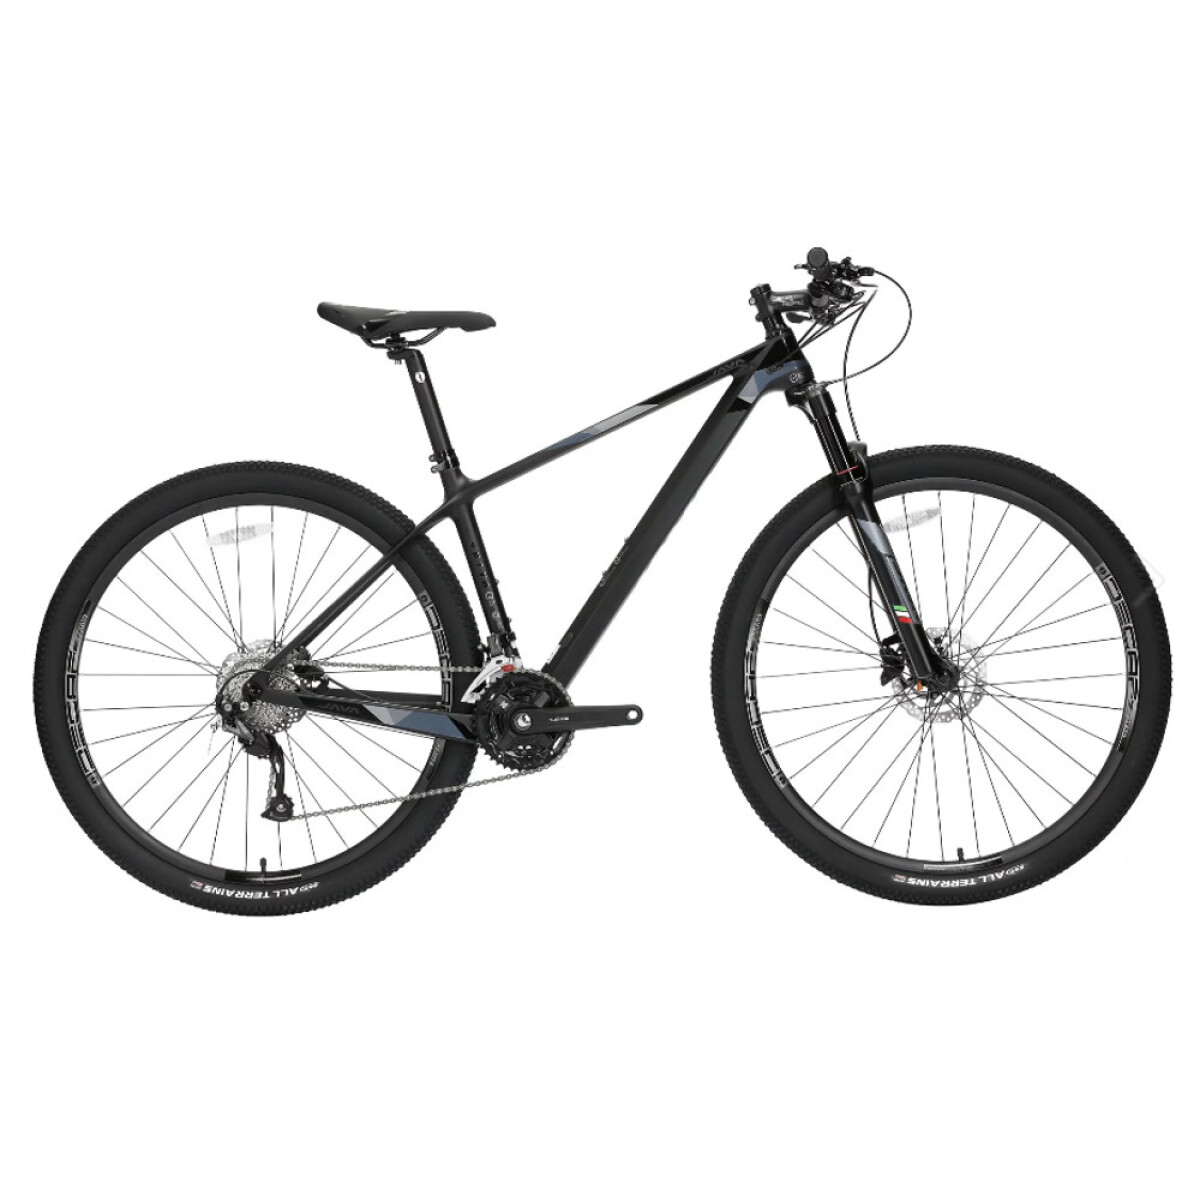 Java - Bicicleta Mtb- Vetta- Rodado 29", 30 Velocidades, Carbono, Talle 15". Color: Negro Mate. 